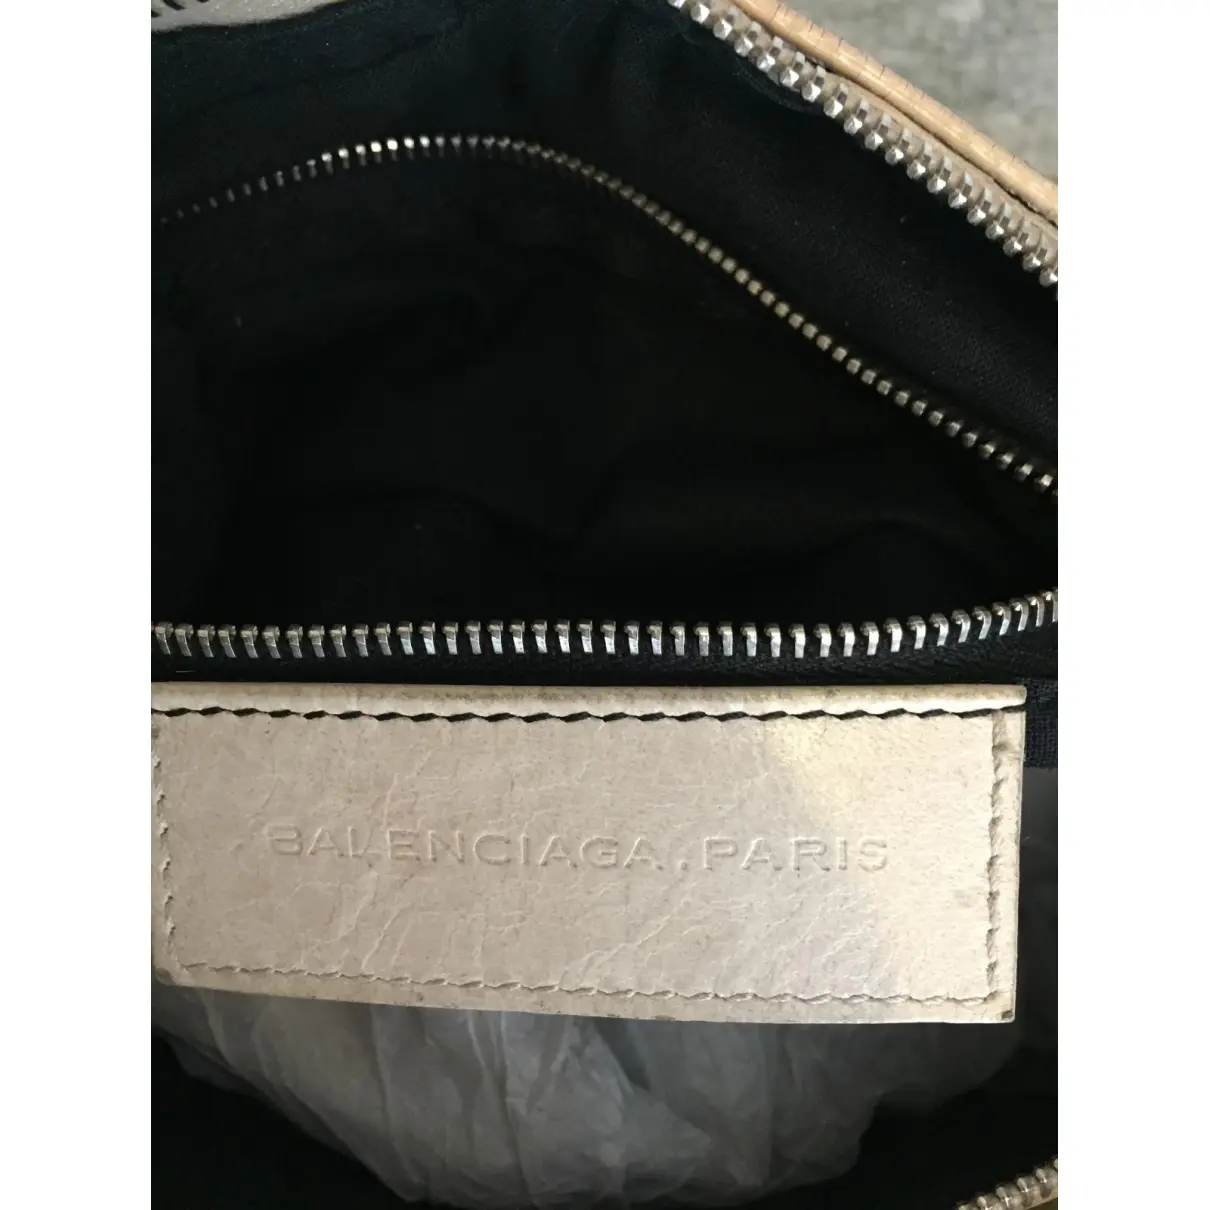 Buy Balenciaga Beige Clutch bag First online